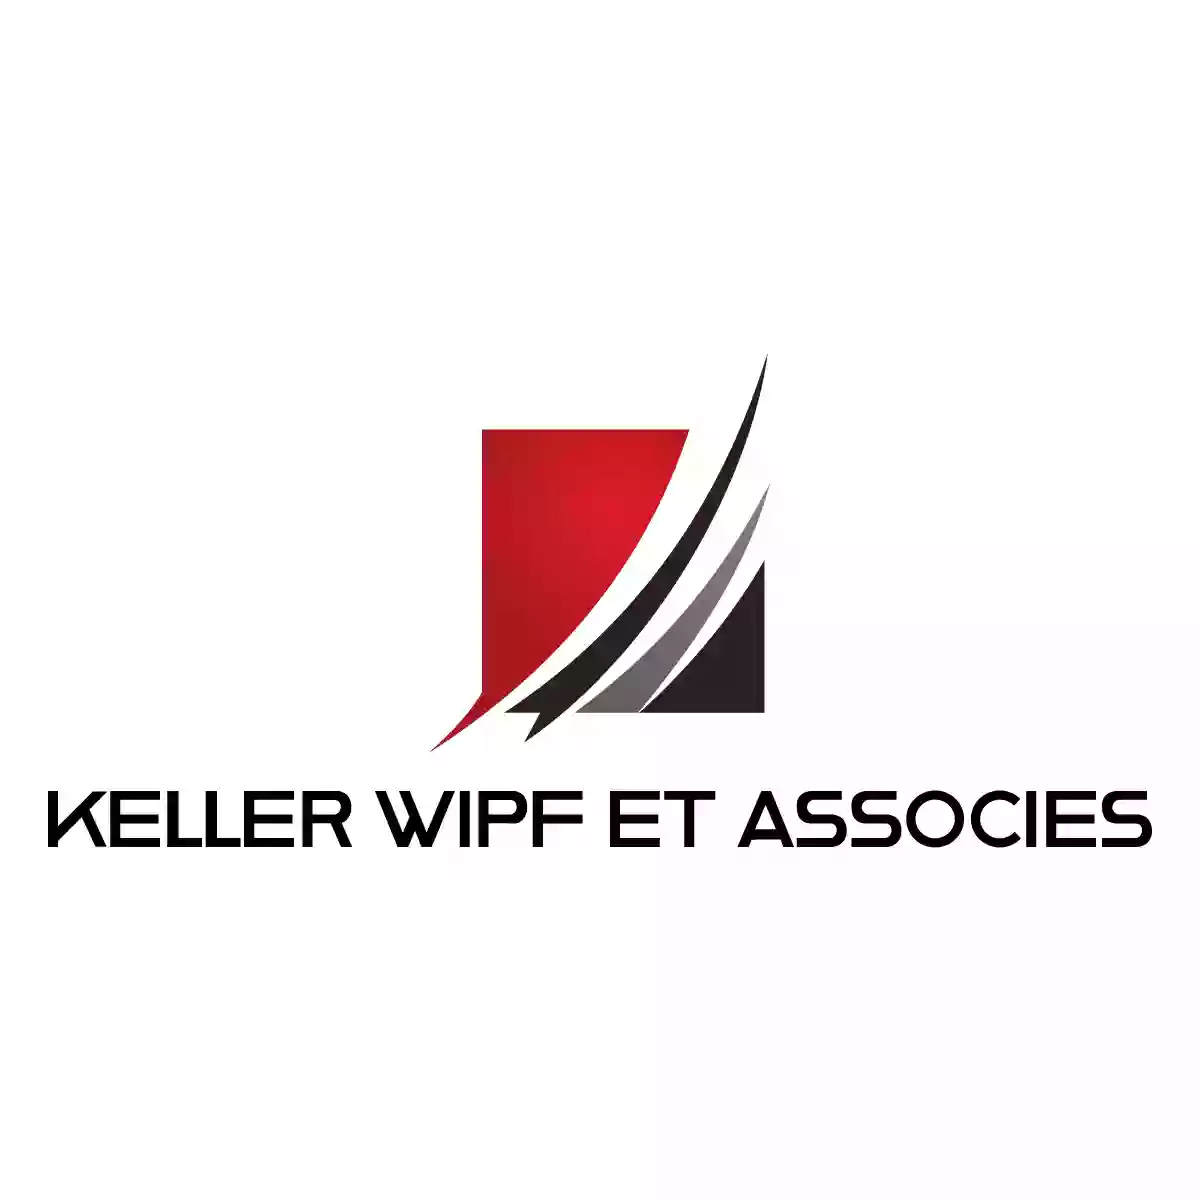 KELLER WIPF ET ASSOCIES